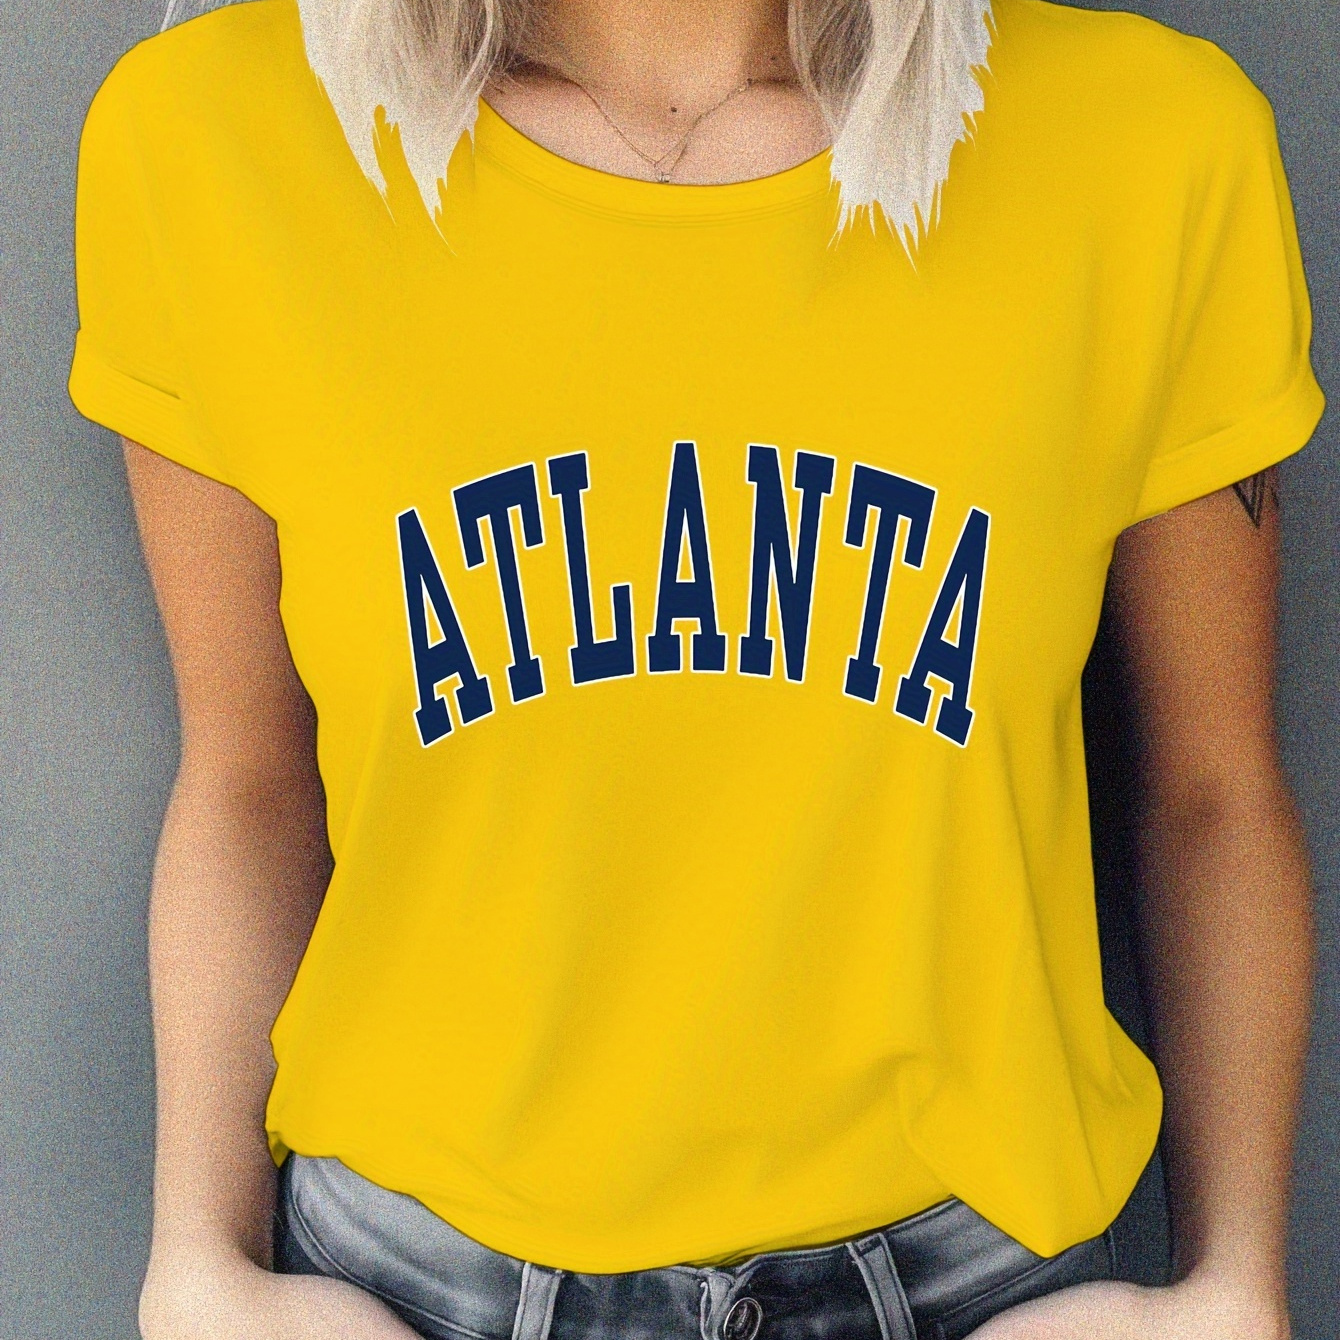 

Atlanta Letter Print T-shirt, Short Sleeve Crew Neck Casual Top For Summer & Spring, Women's Clothing